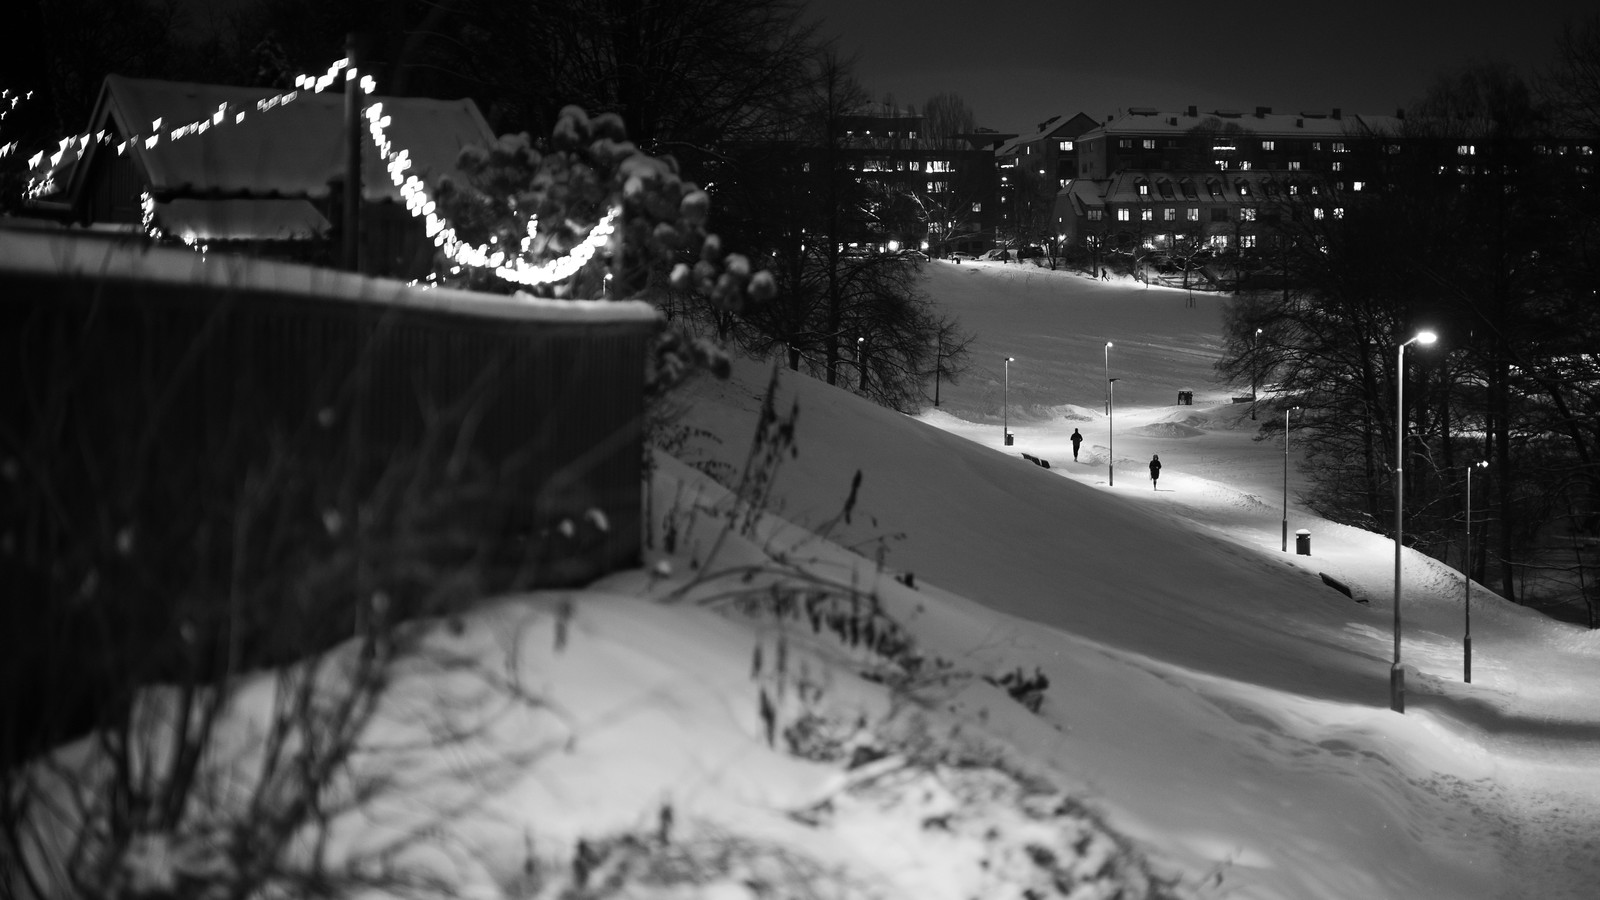 Night walk in snow